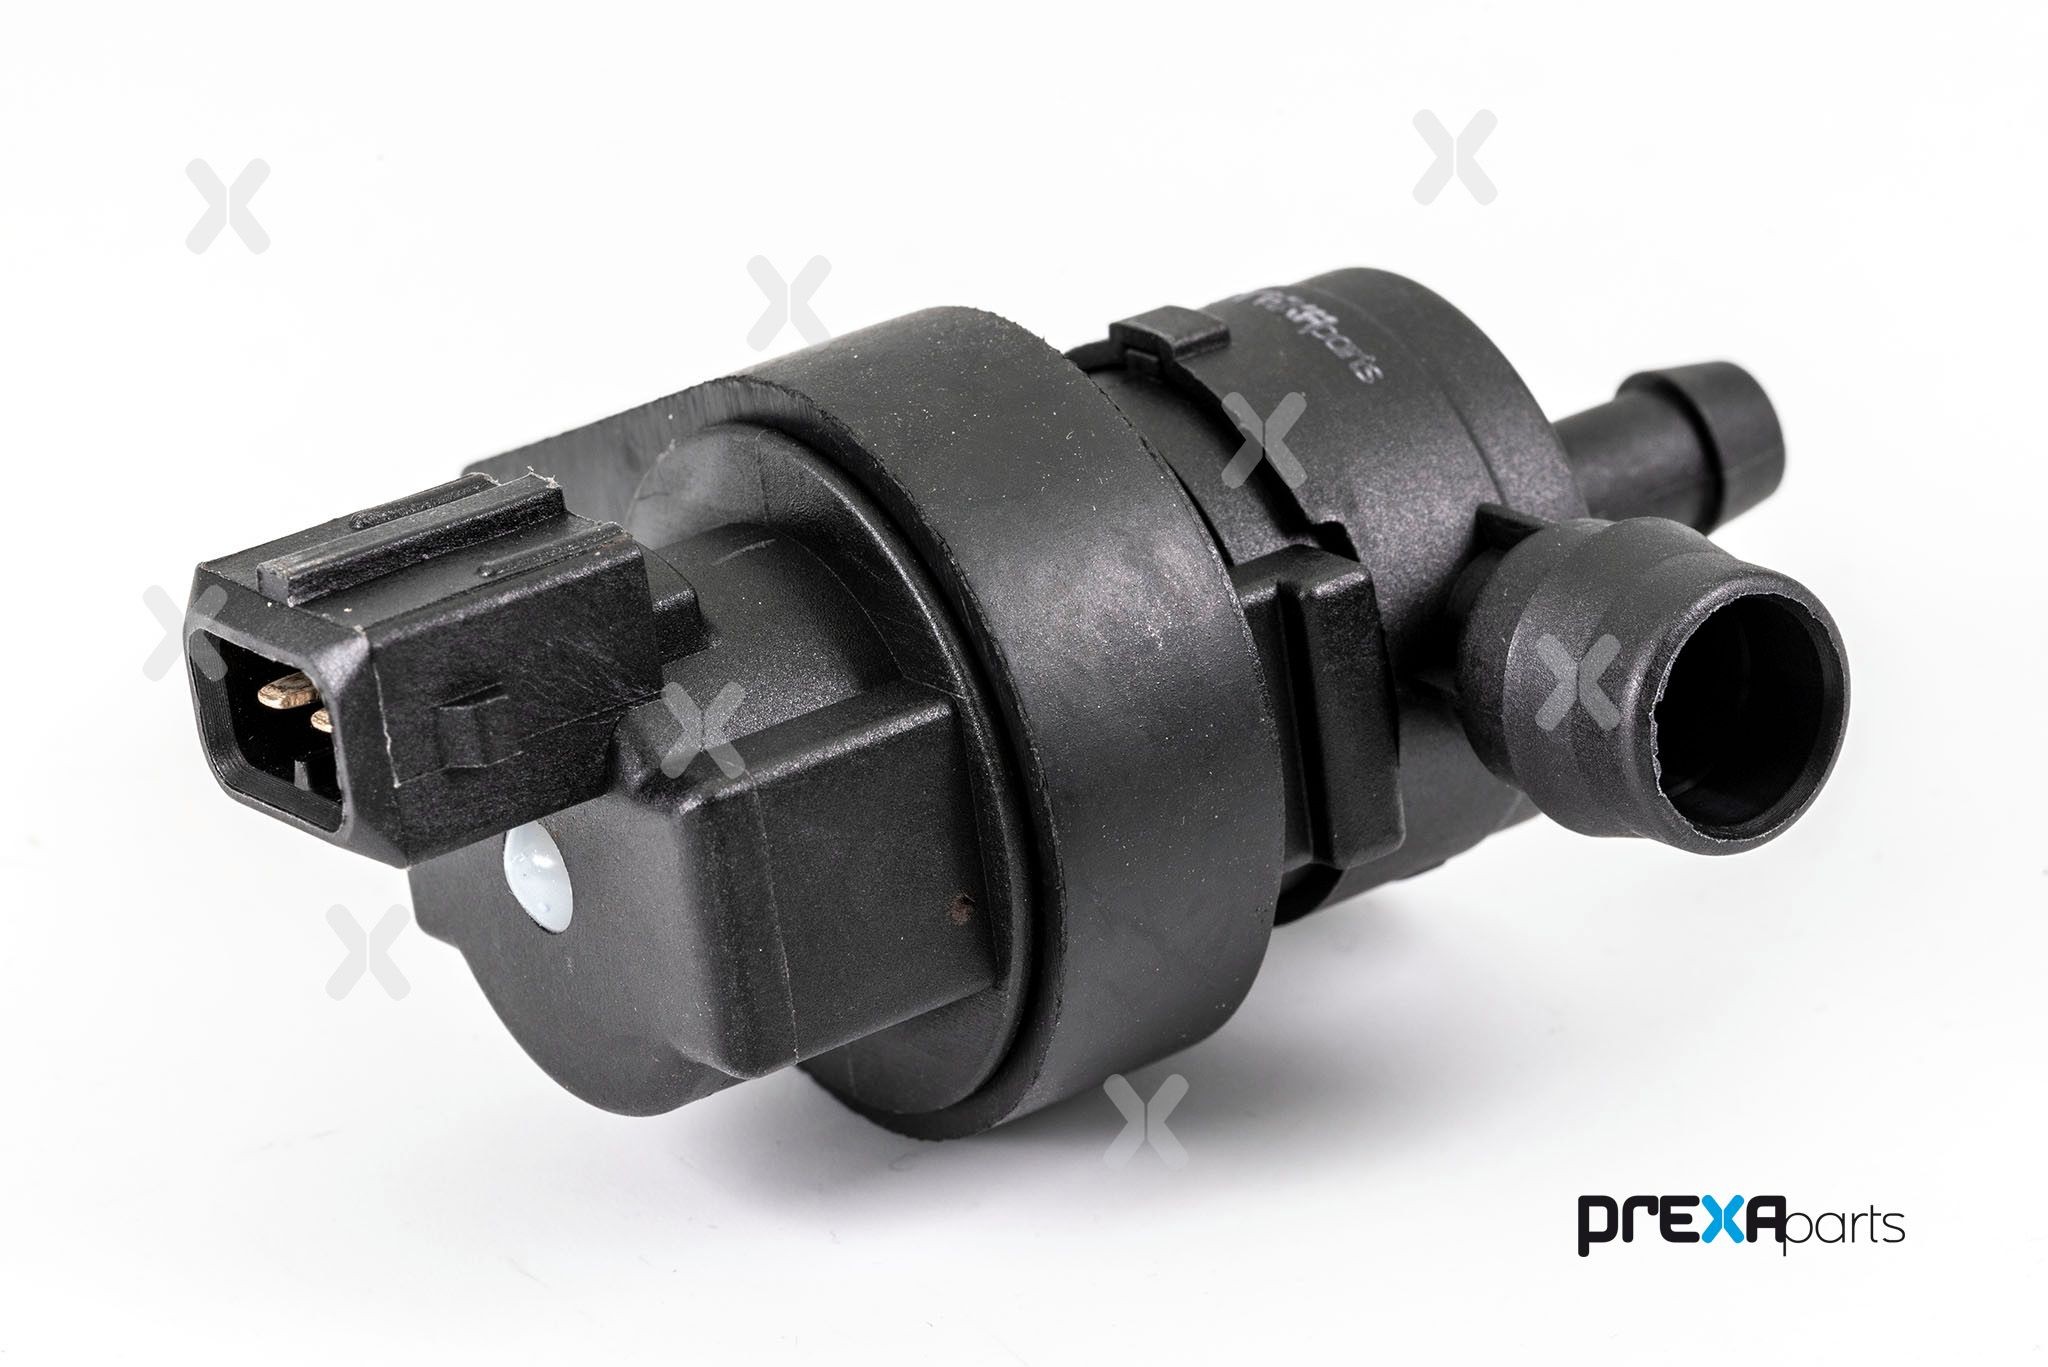 PREXAparts Tank vent valve P229036